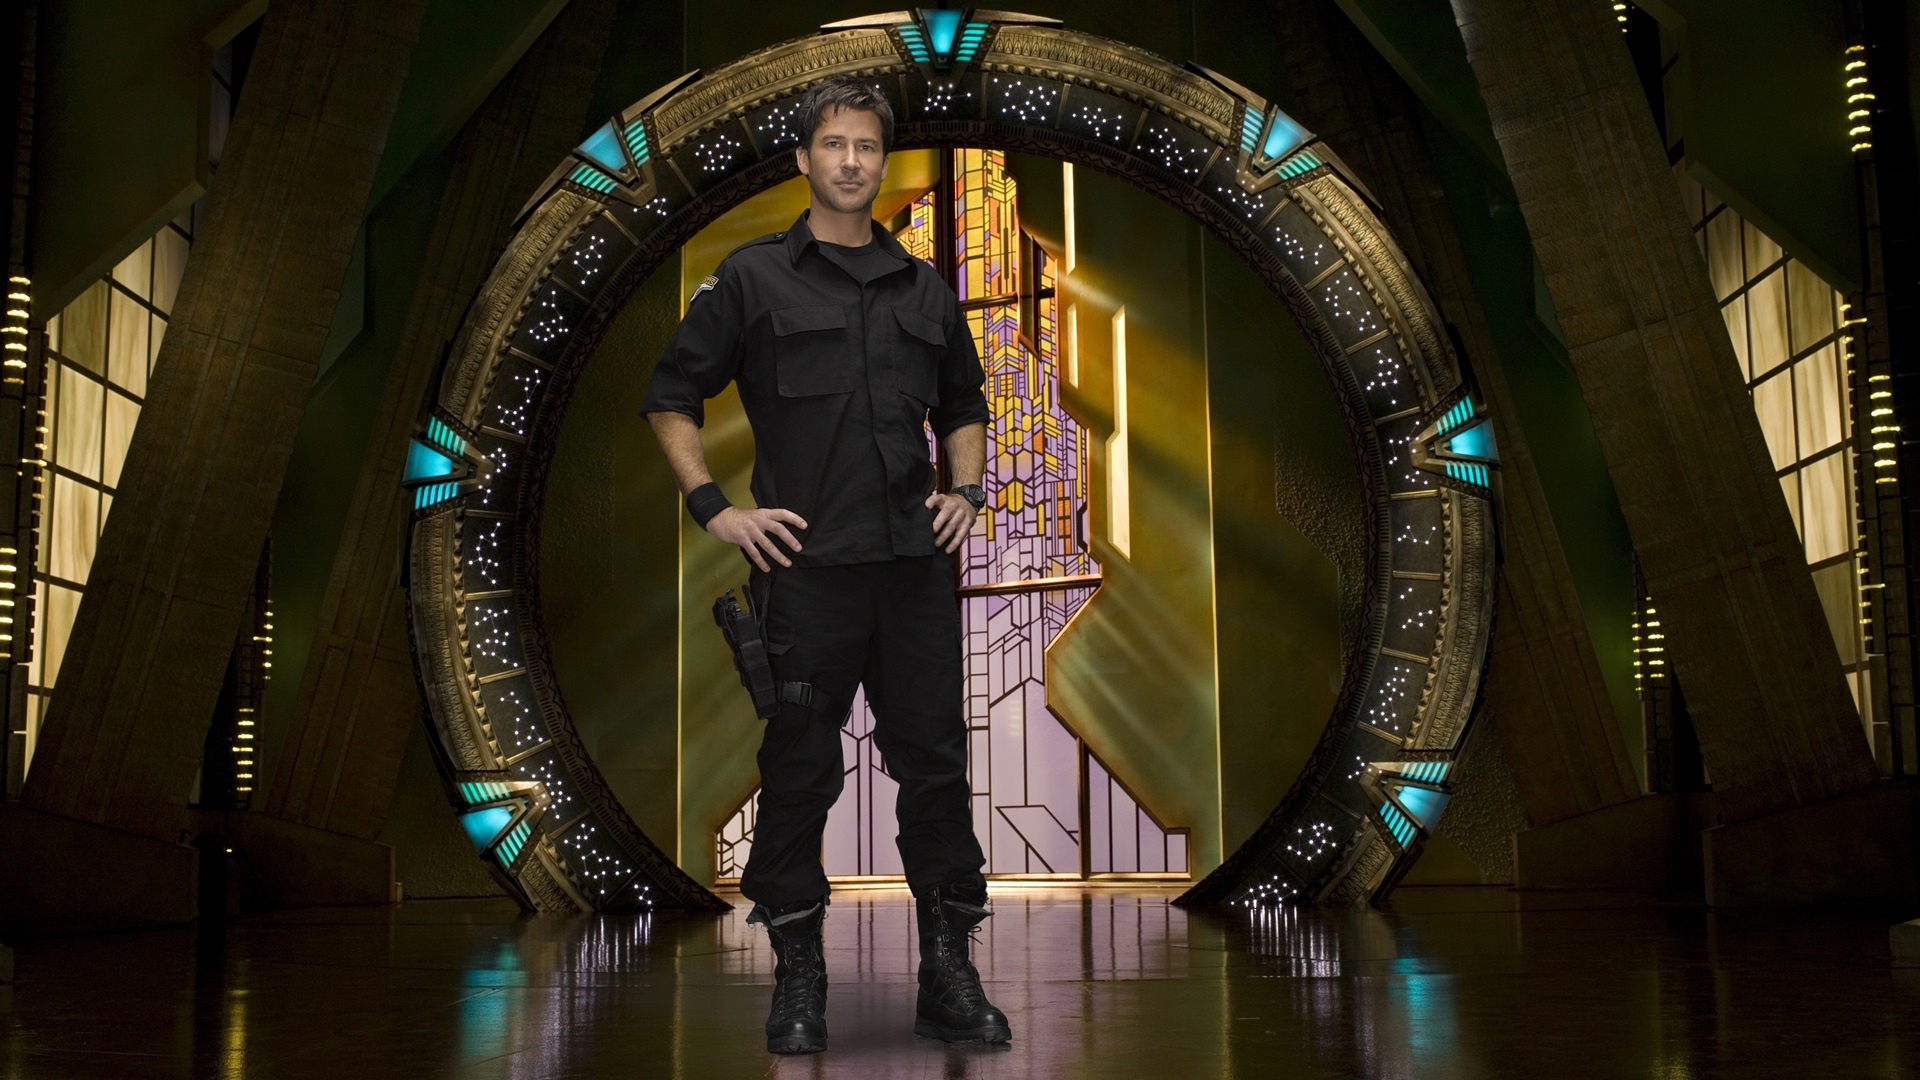 Stargate: Atlantis wallpaper, HD background image, Sci-fi TV series, Visual delight, 1920x1080 Full HD Desktop